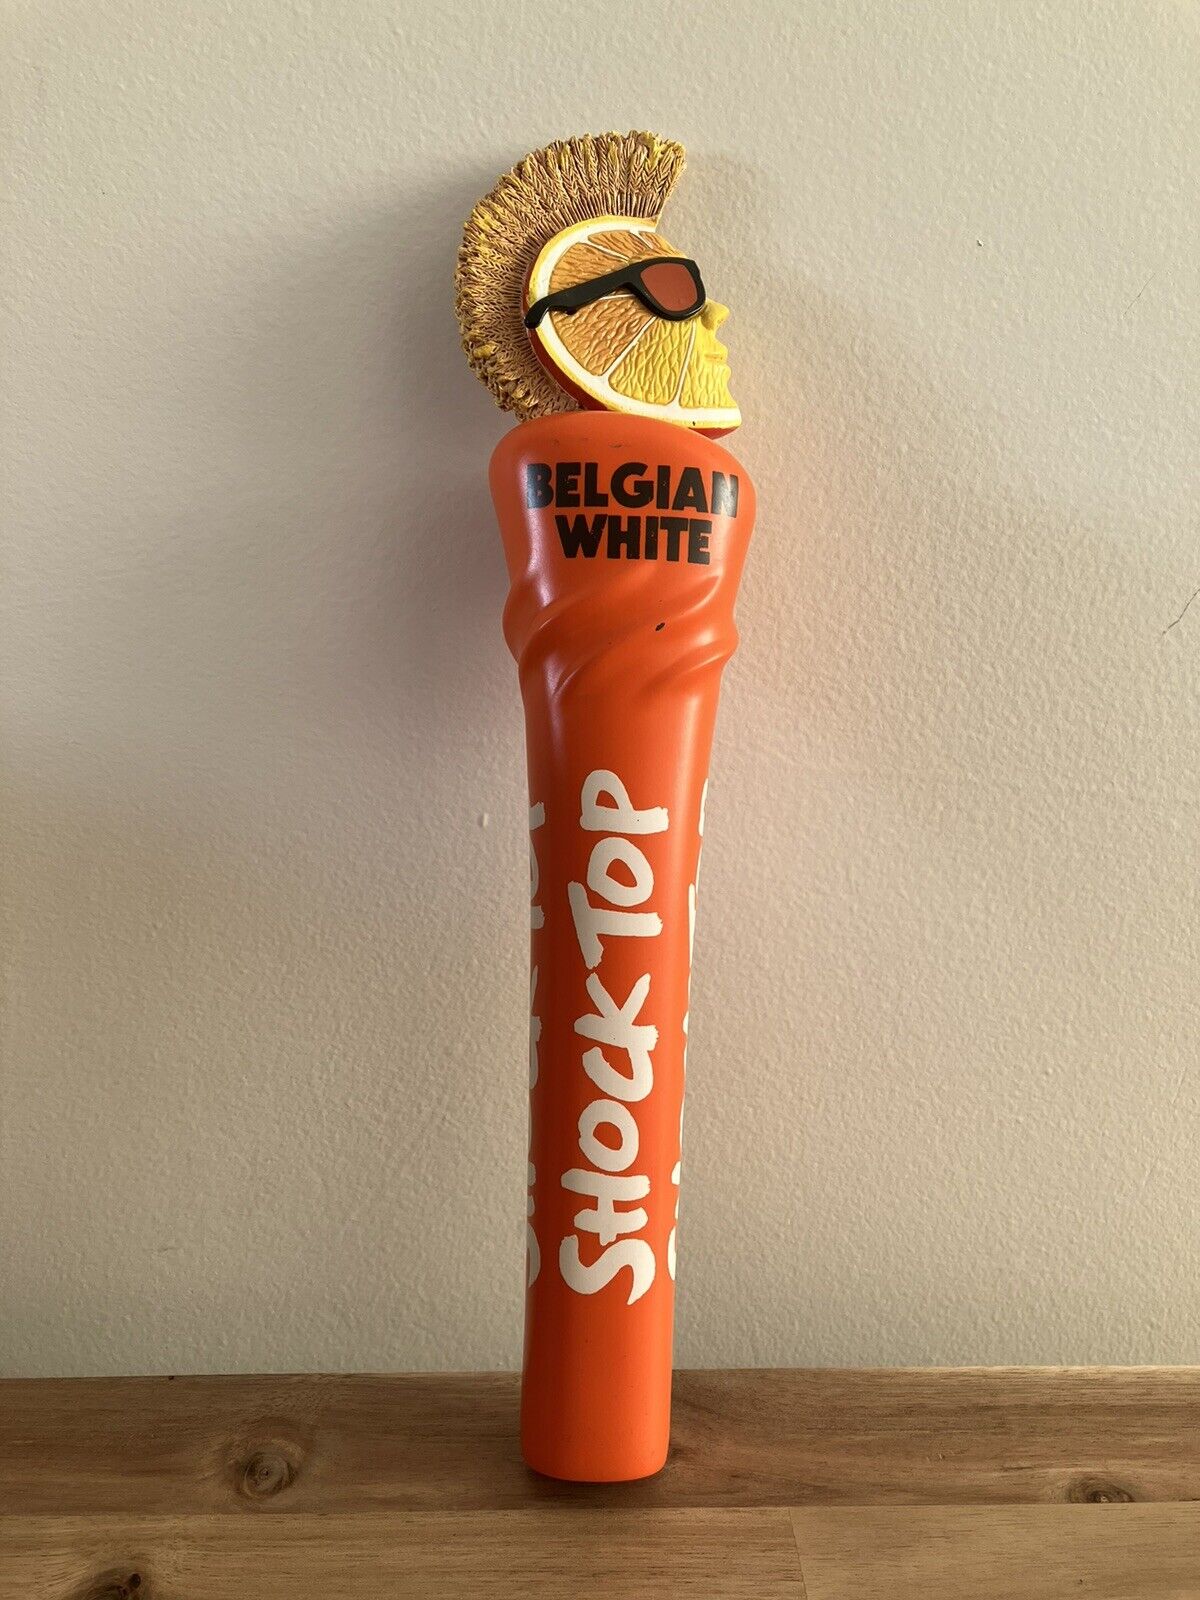 Shock Top Belgian White  - Orange, Sunglasses and Mohawk - Beer Tap Handle 12\